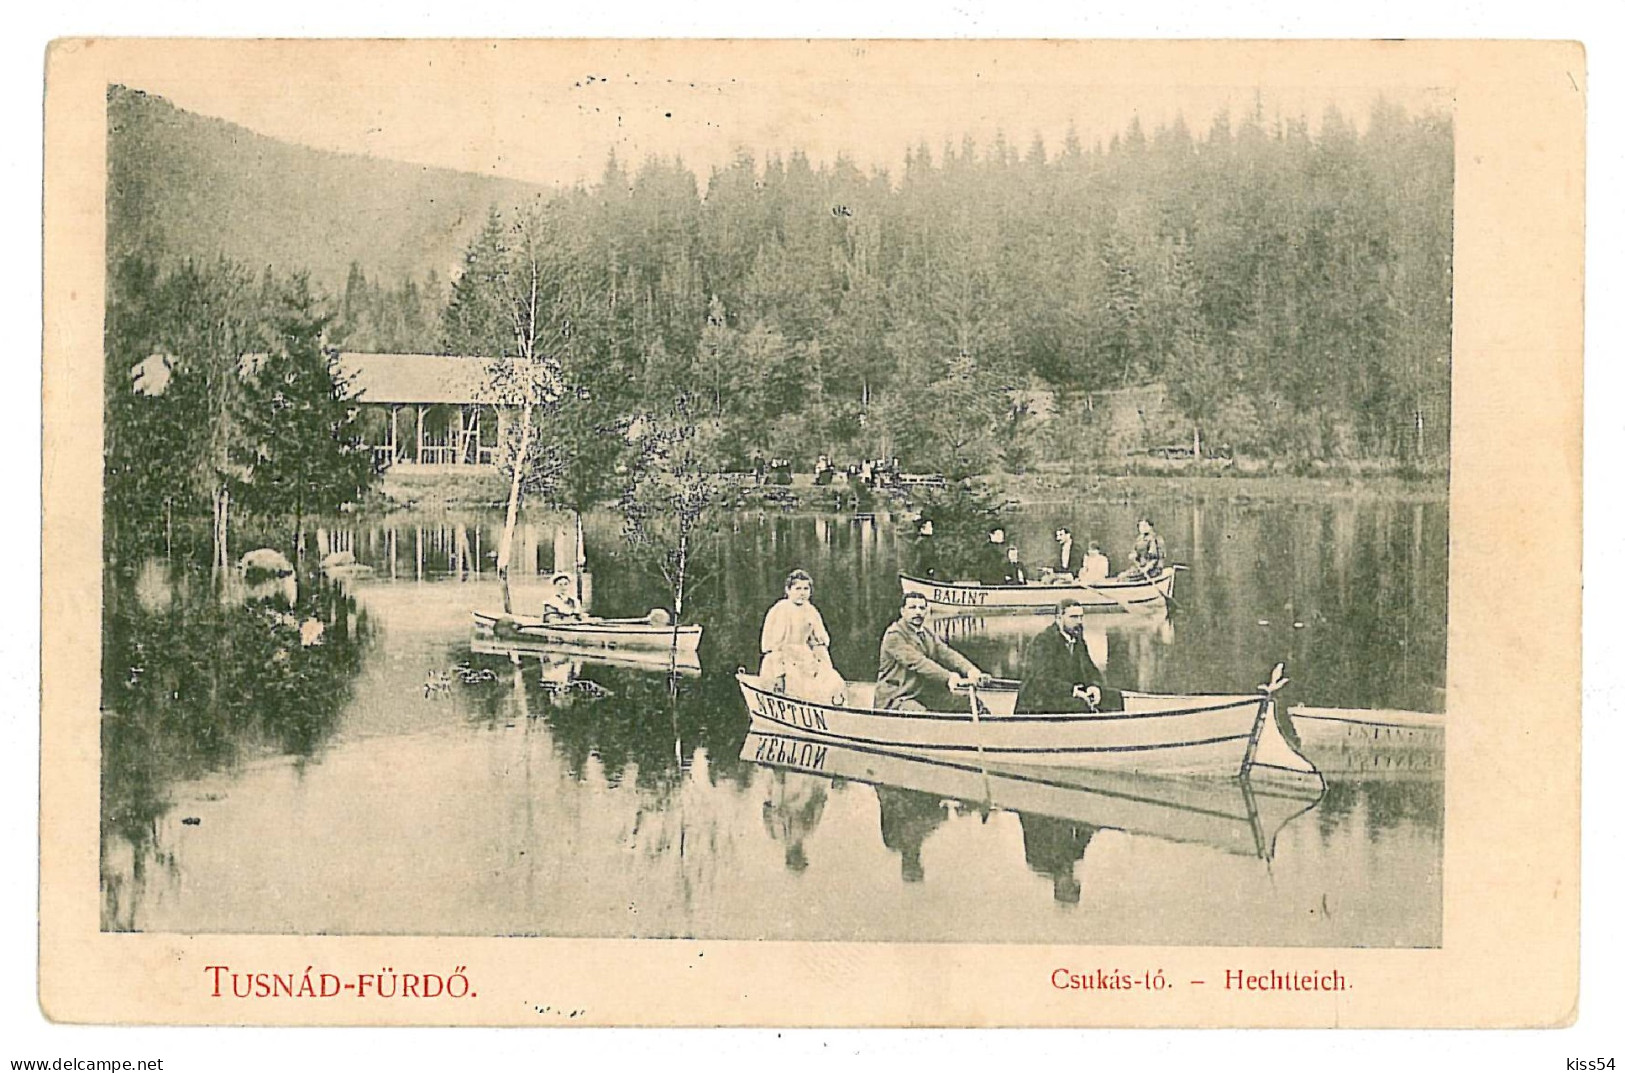 RO 40 - 3382 TUSNAD, Harghita, Boats On The Lake, Romania - Old Postcard - Used - 1905 - Rumänien